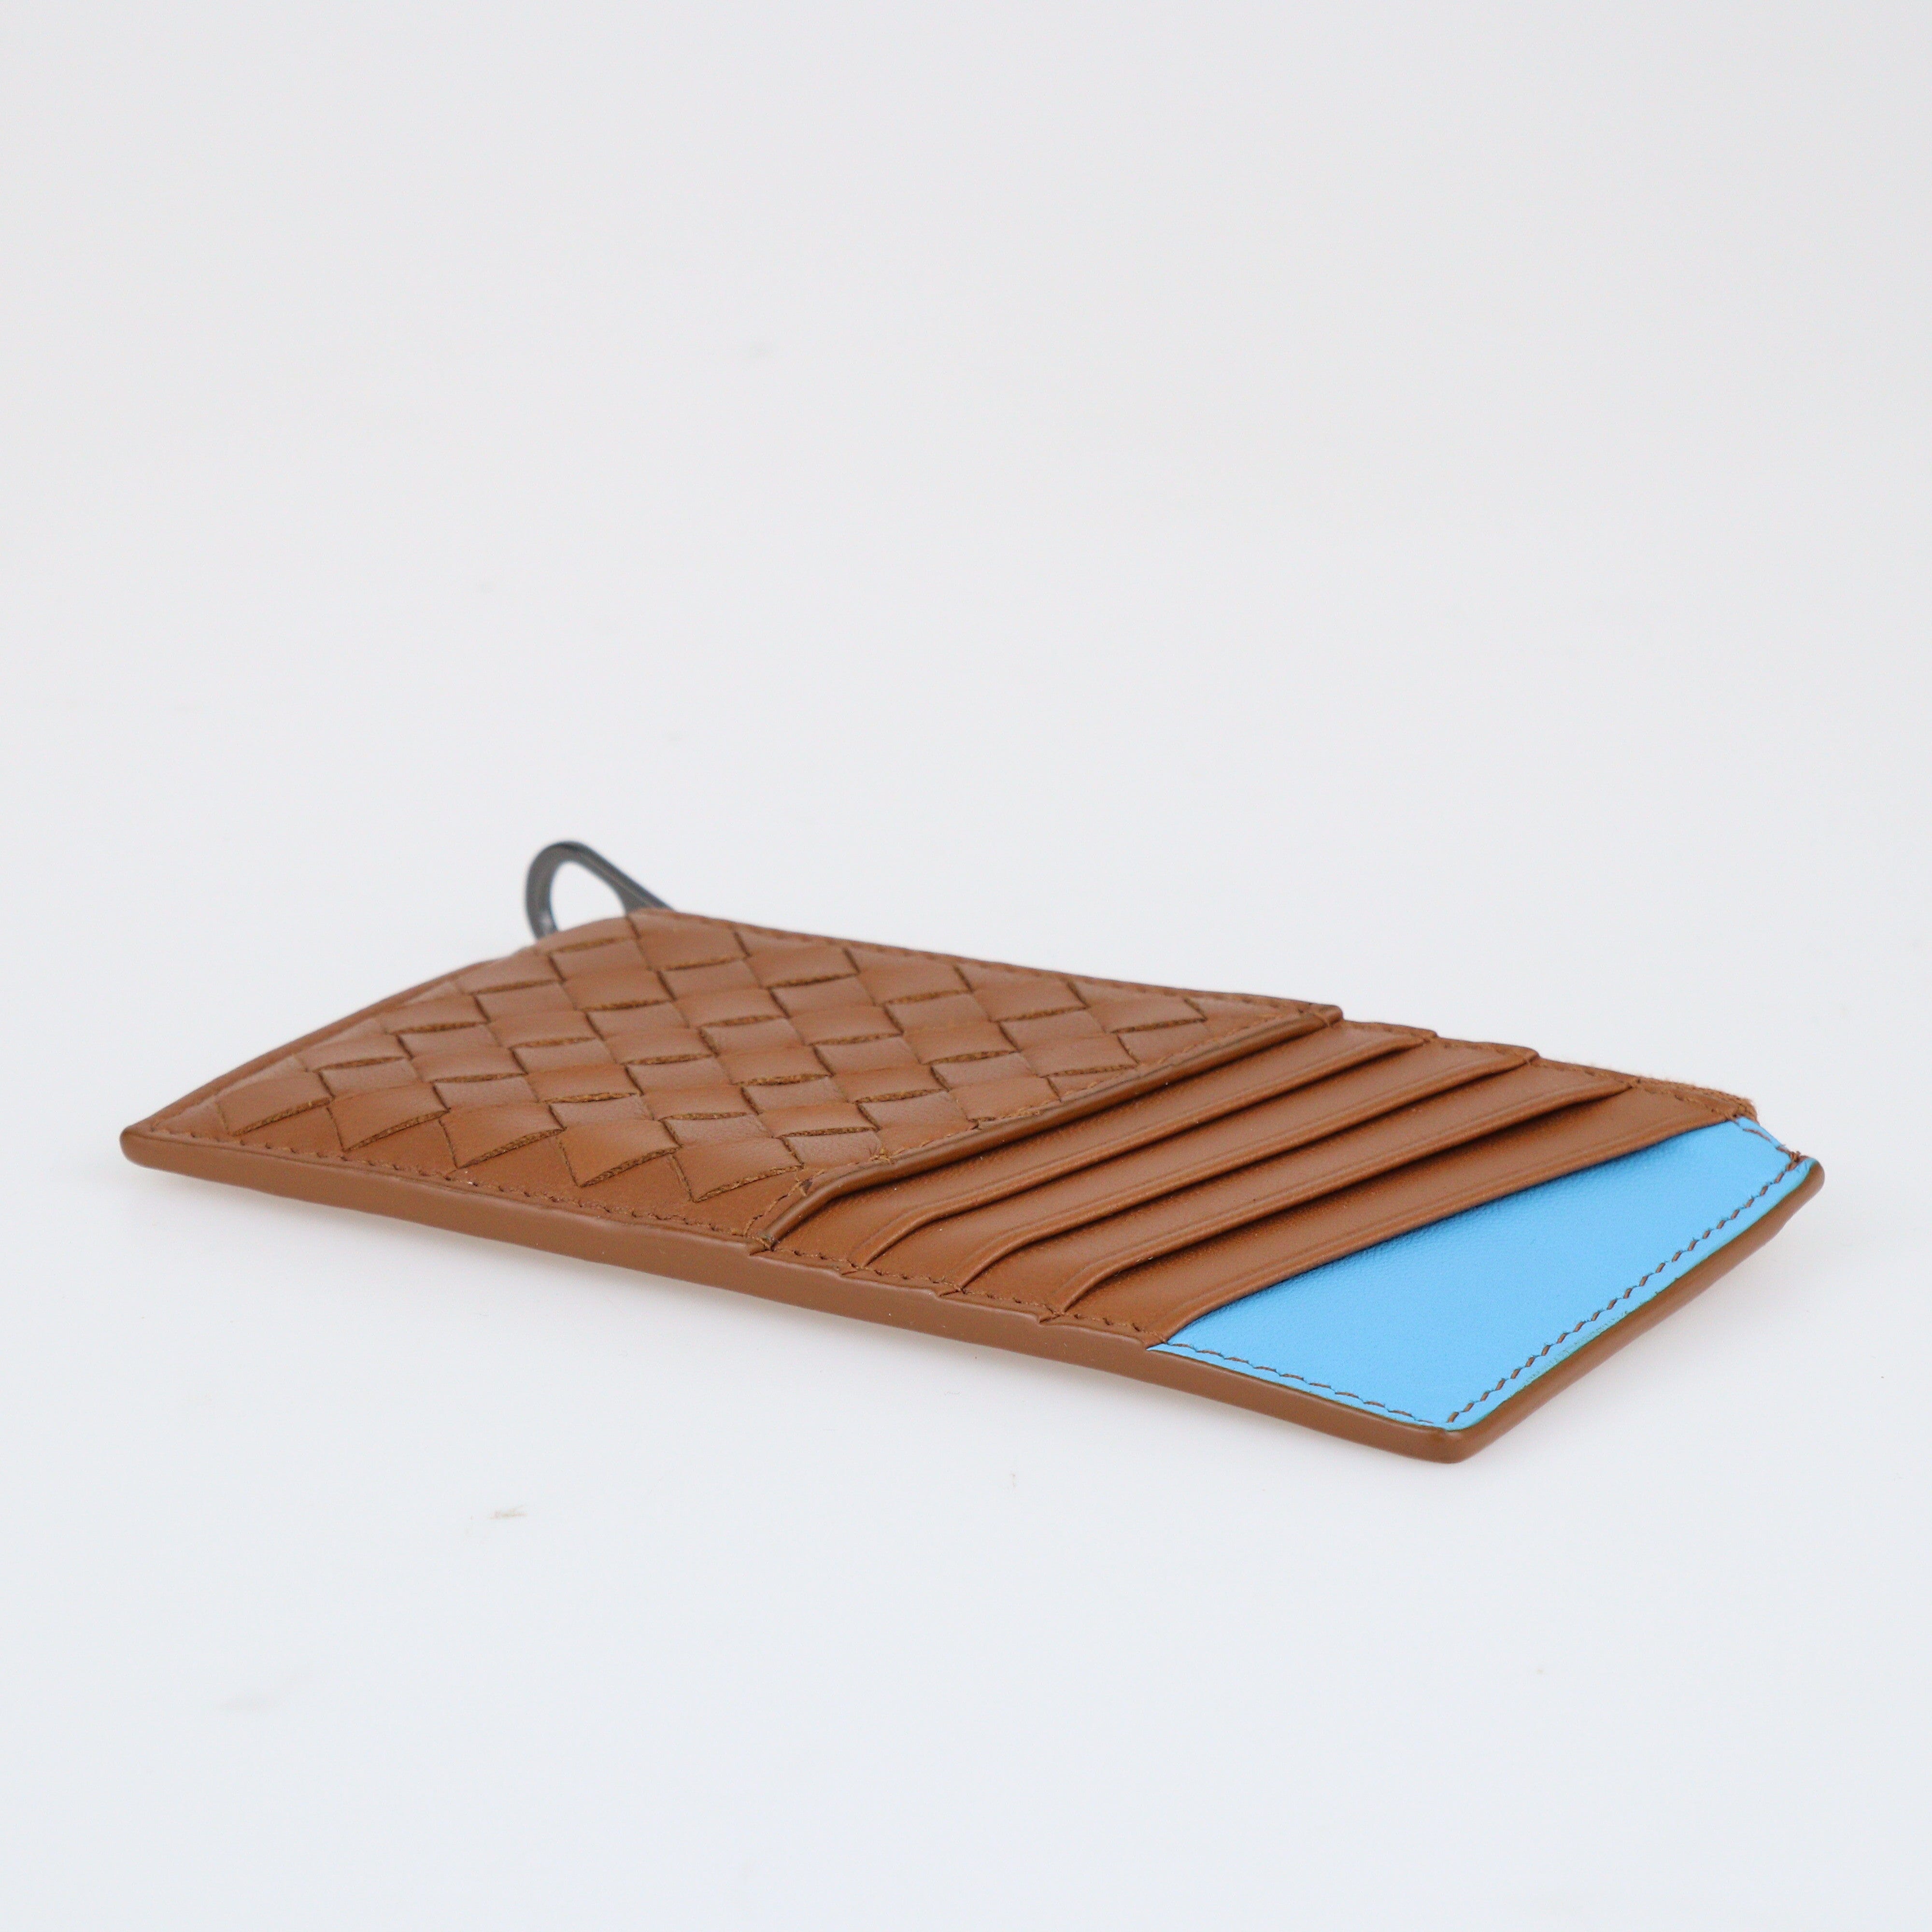 Brown/Blue Intrecciato Zipped Card Holder Wallet Bags Bottega Veneta 